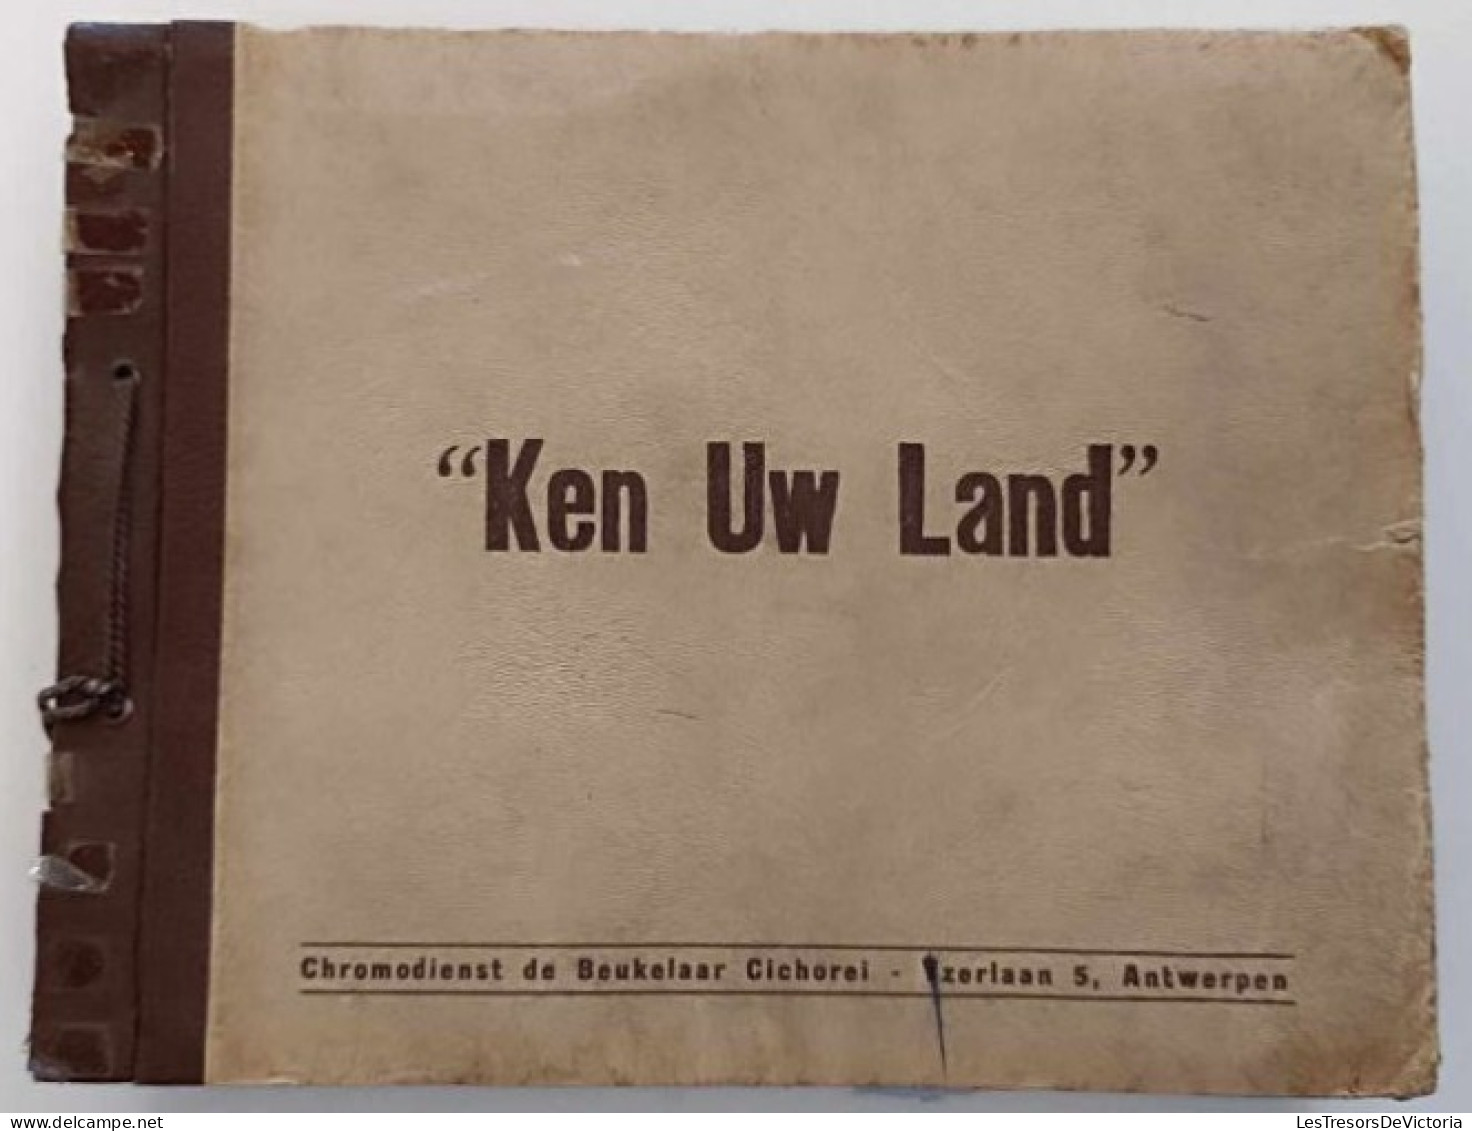 Chromos - Ken Uw Land - Chromodienst De Beukelaar Cichorei - Antwerpen - Livre De Chromos Sur La Belgique - Album & Cataloghi